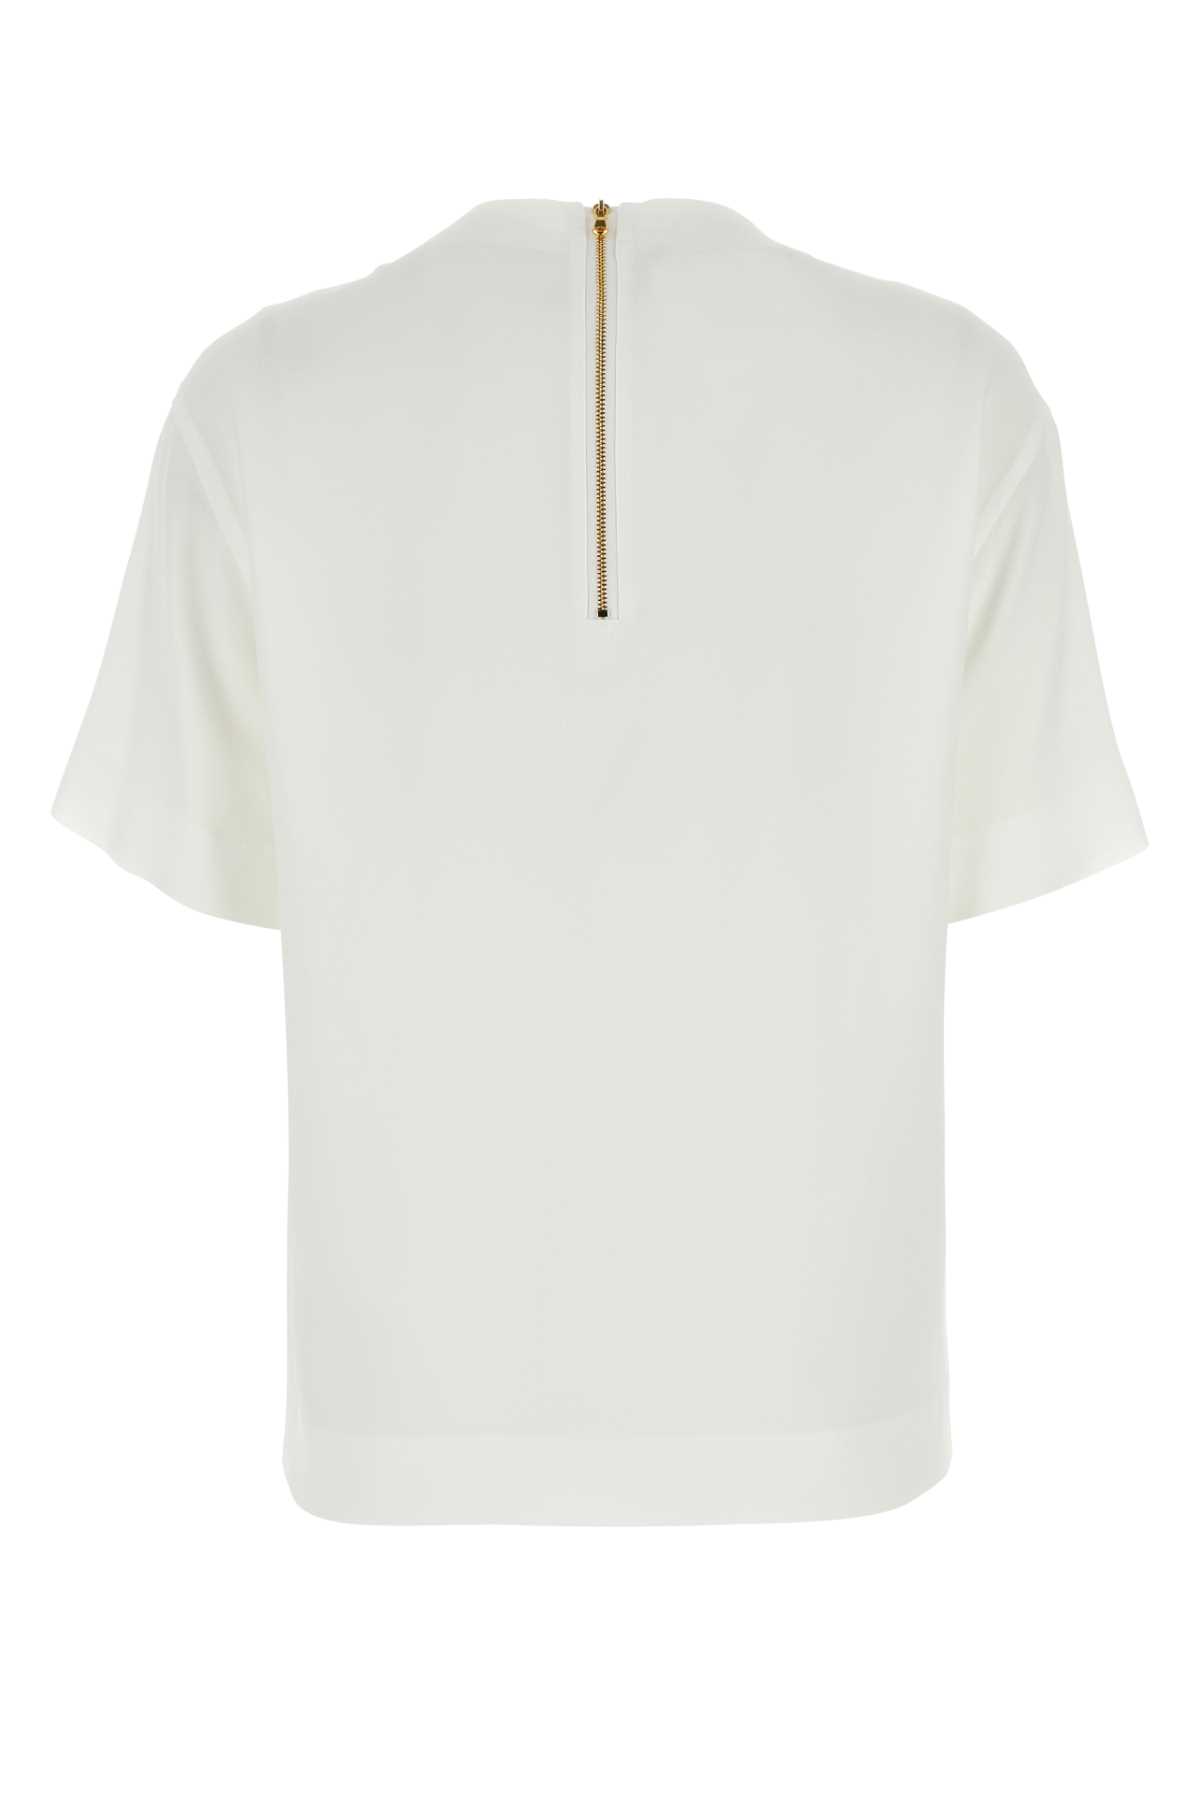 Moschino White Crepe T-shirt In Fantasiabianco